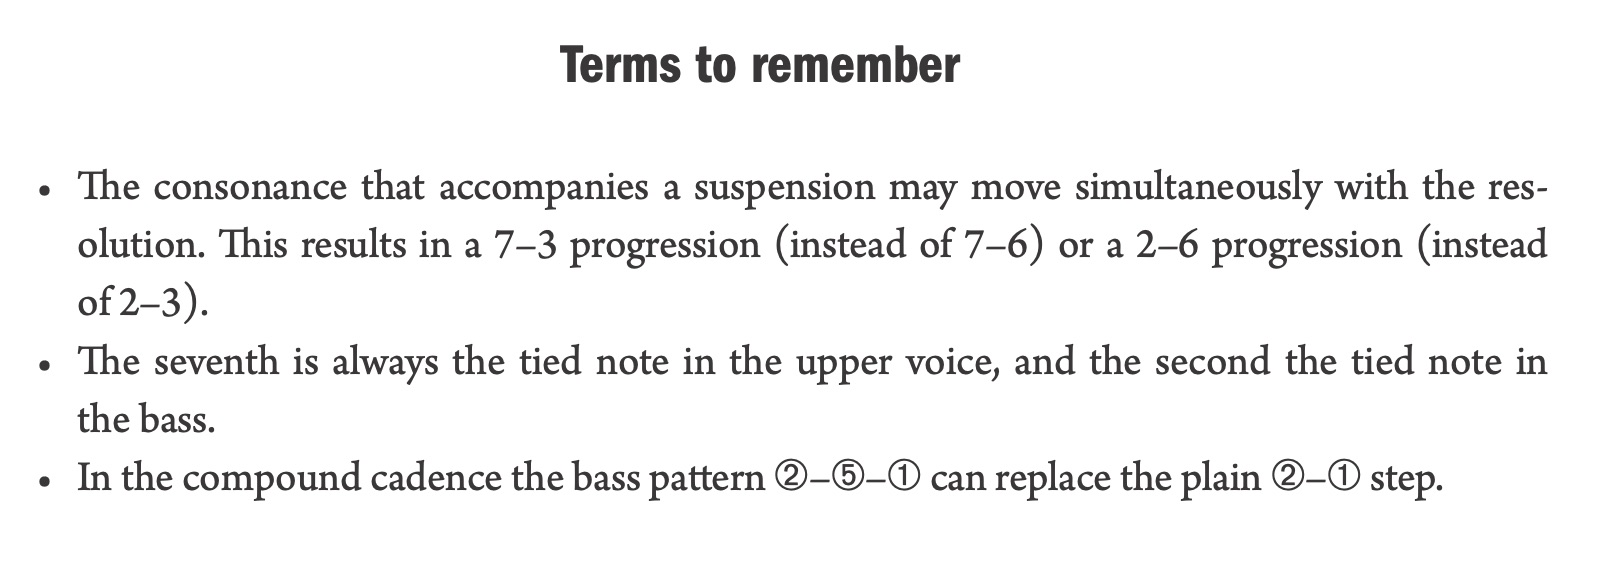 ijzerman terms to remember 1.4.jpg